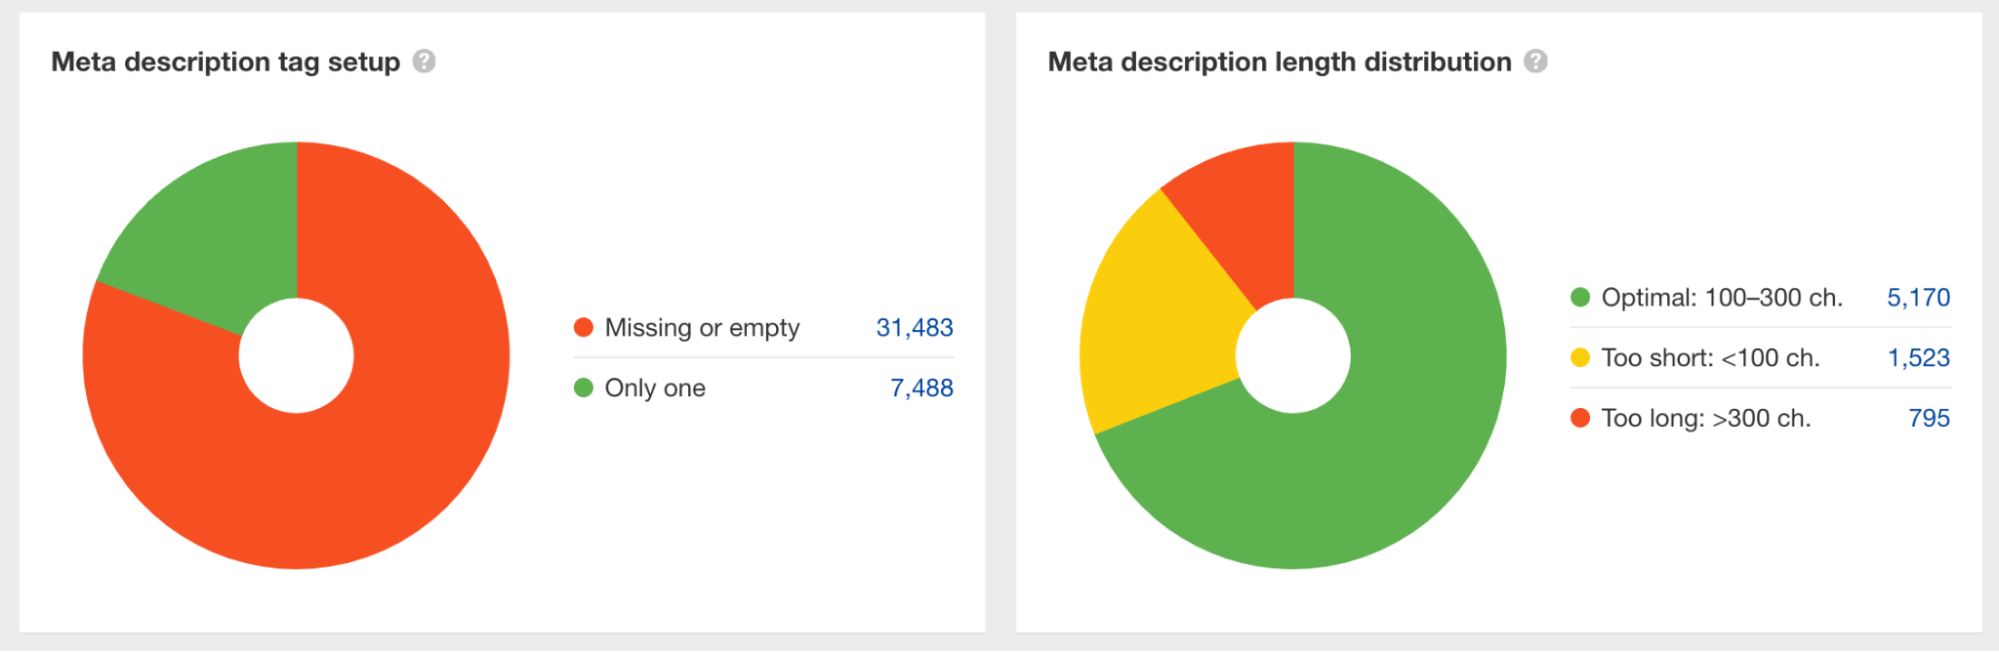 Meta description tag report in Ahrefs' Site Audit